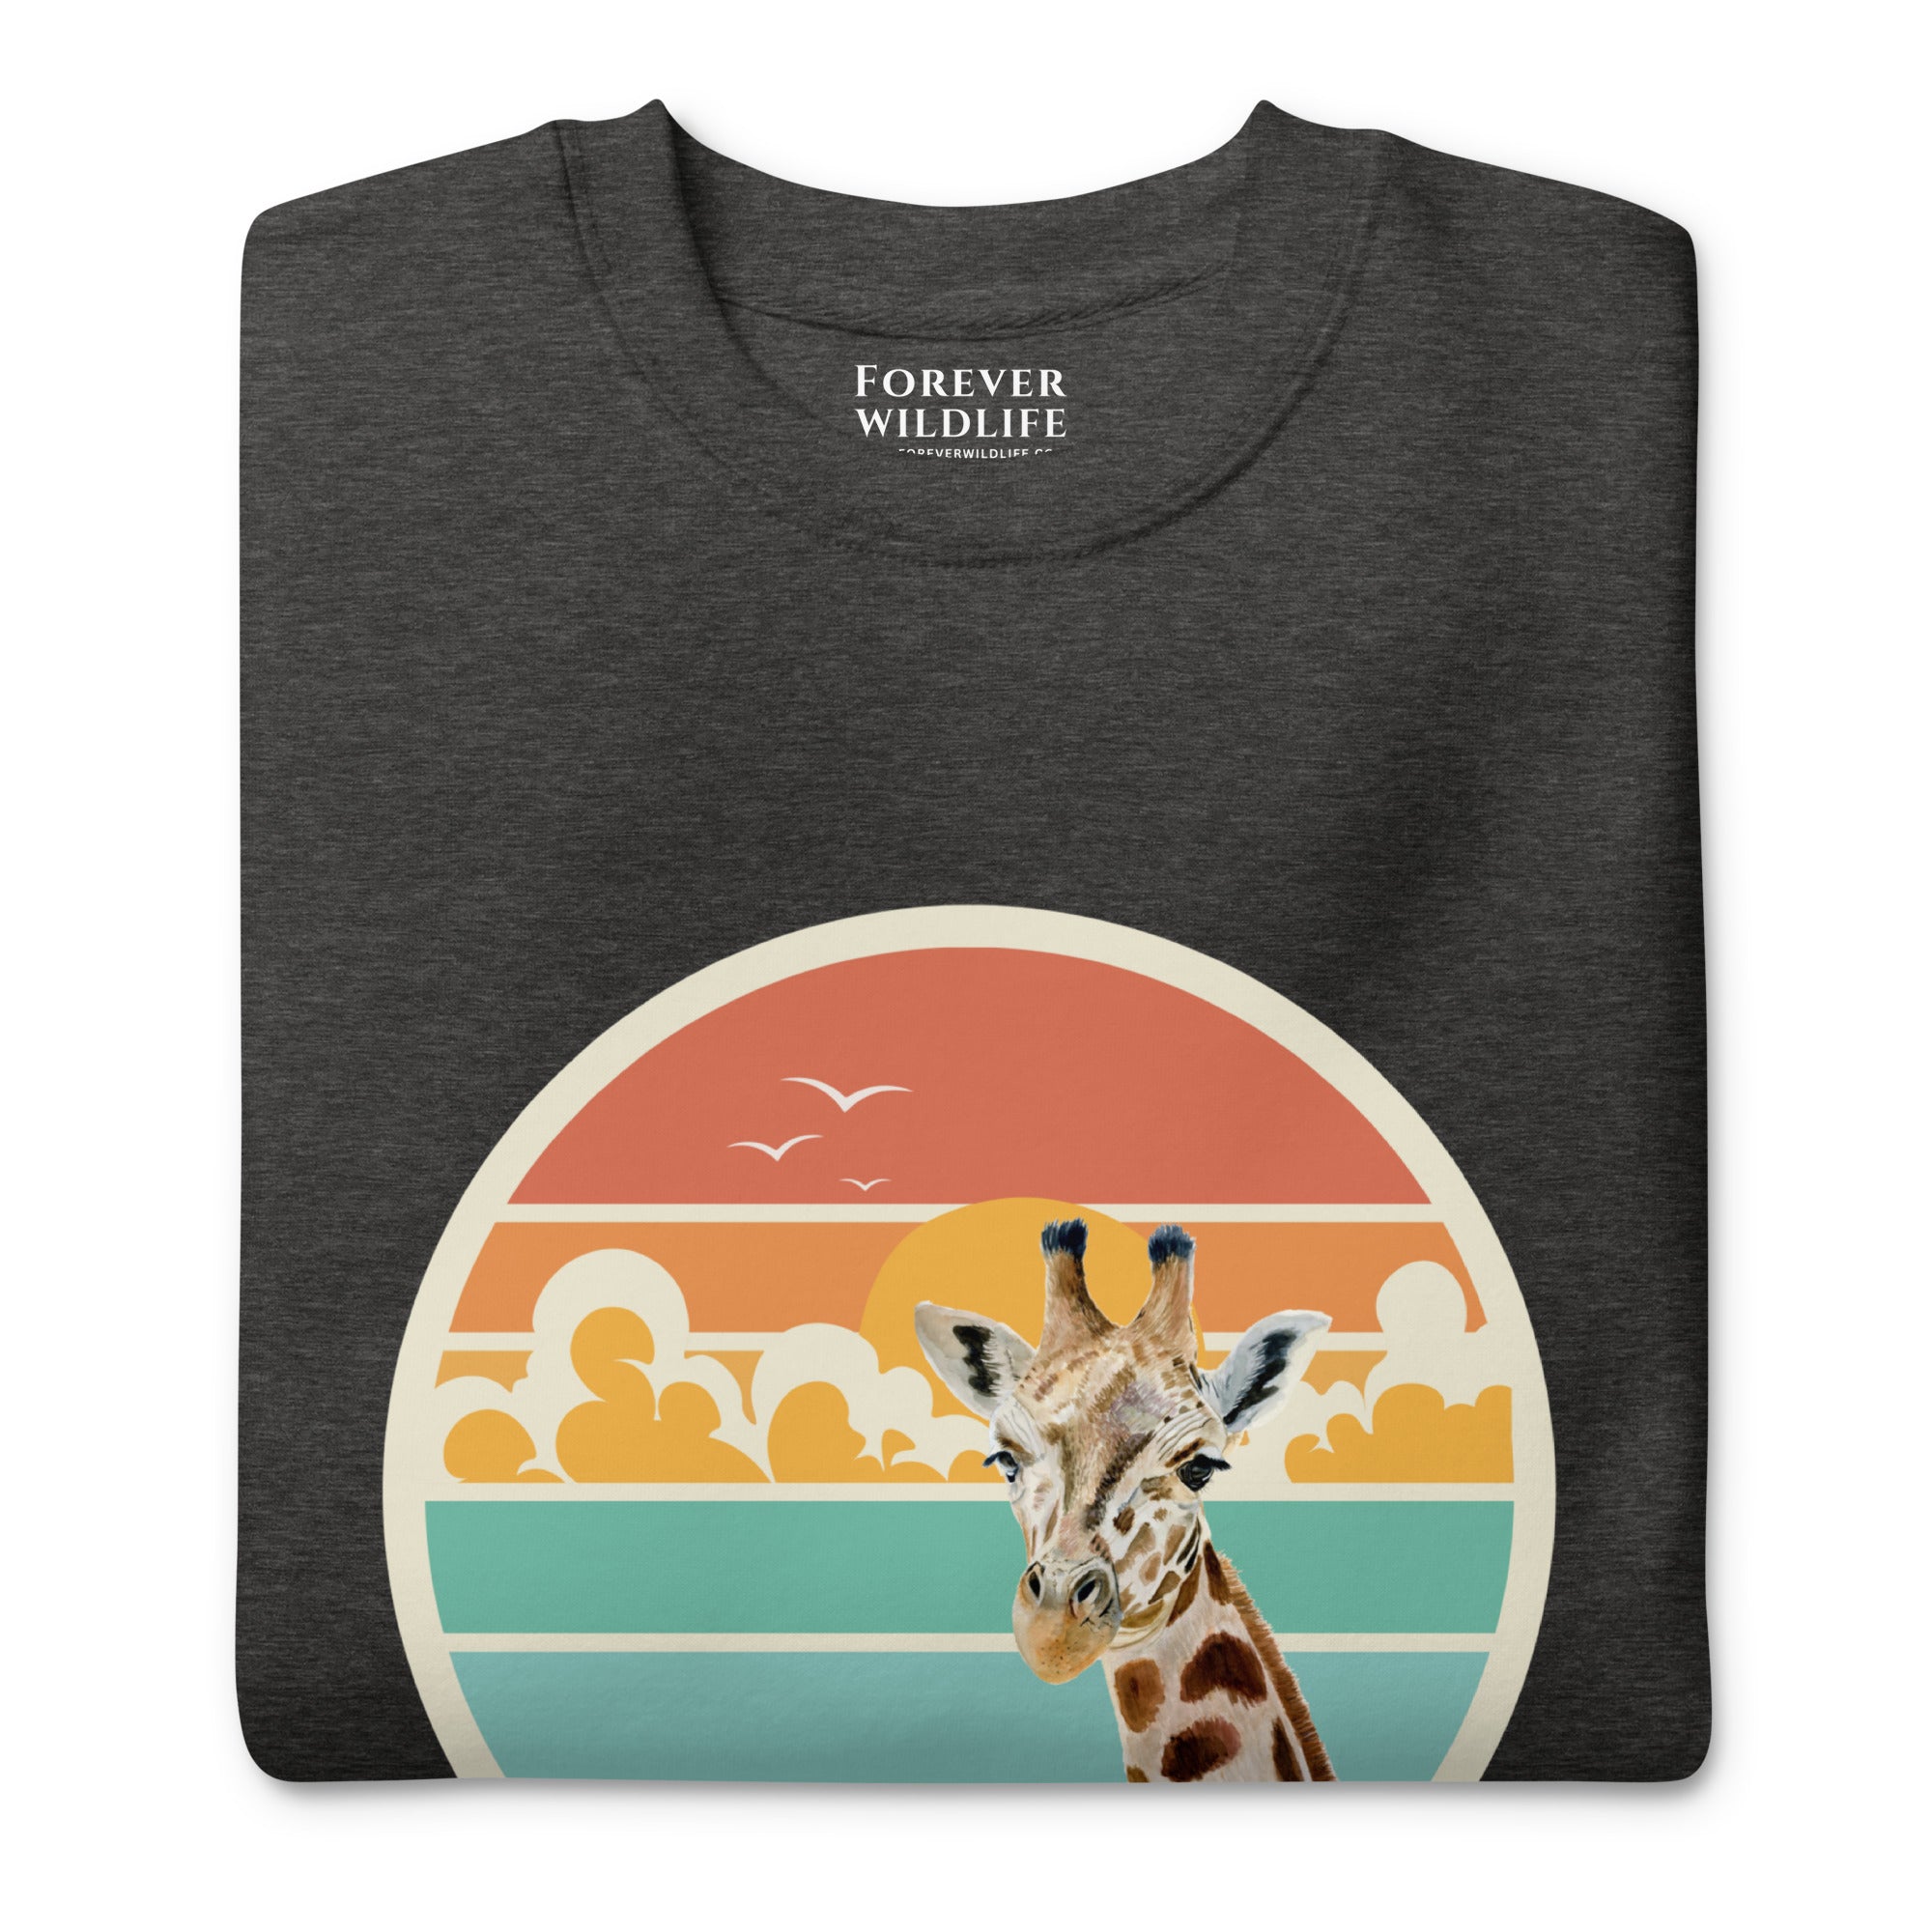 Giraffe Sweatshirt in Charcoal-Premium Wildlife Animal Inspiration Sweatshirt Design, part of Wildlife Sweatshirts & Clothing from Forever Wildlife.